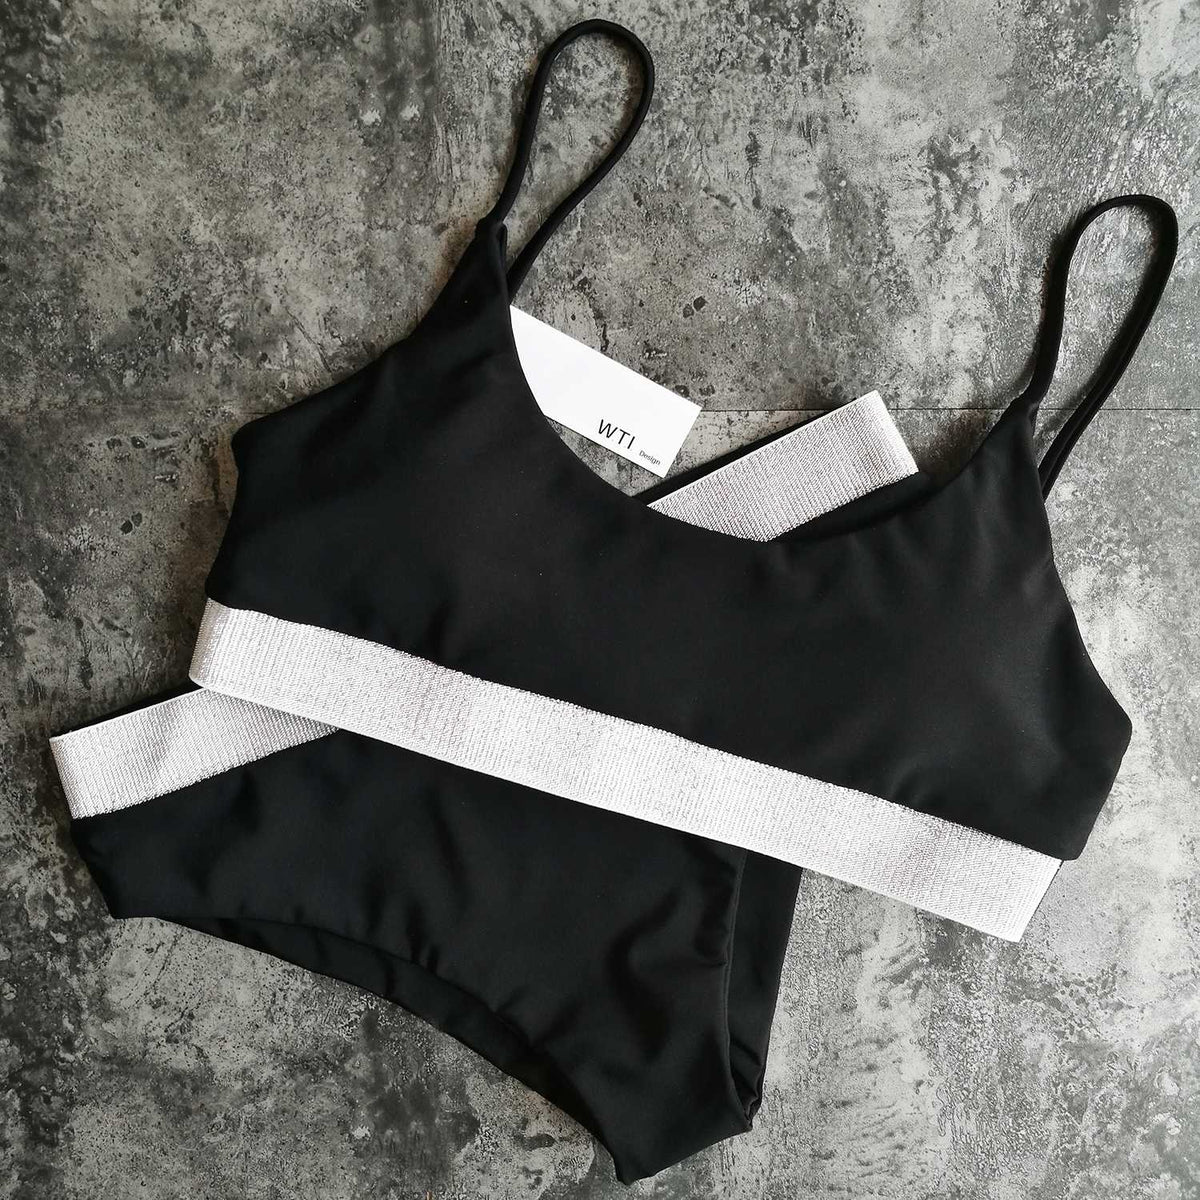 Silver Swimsuit with Knit Hem High Waist High Cut Crop Top Bikini Set - worthtryit.com